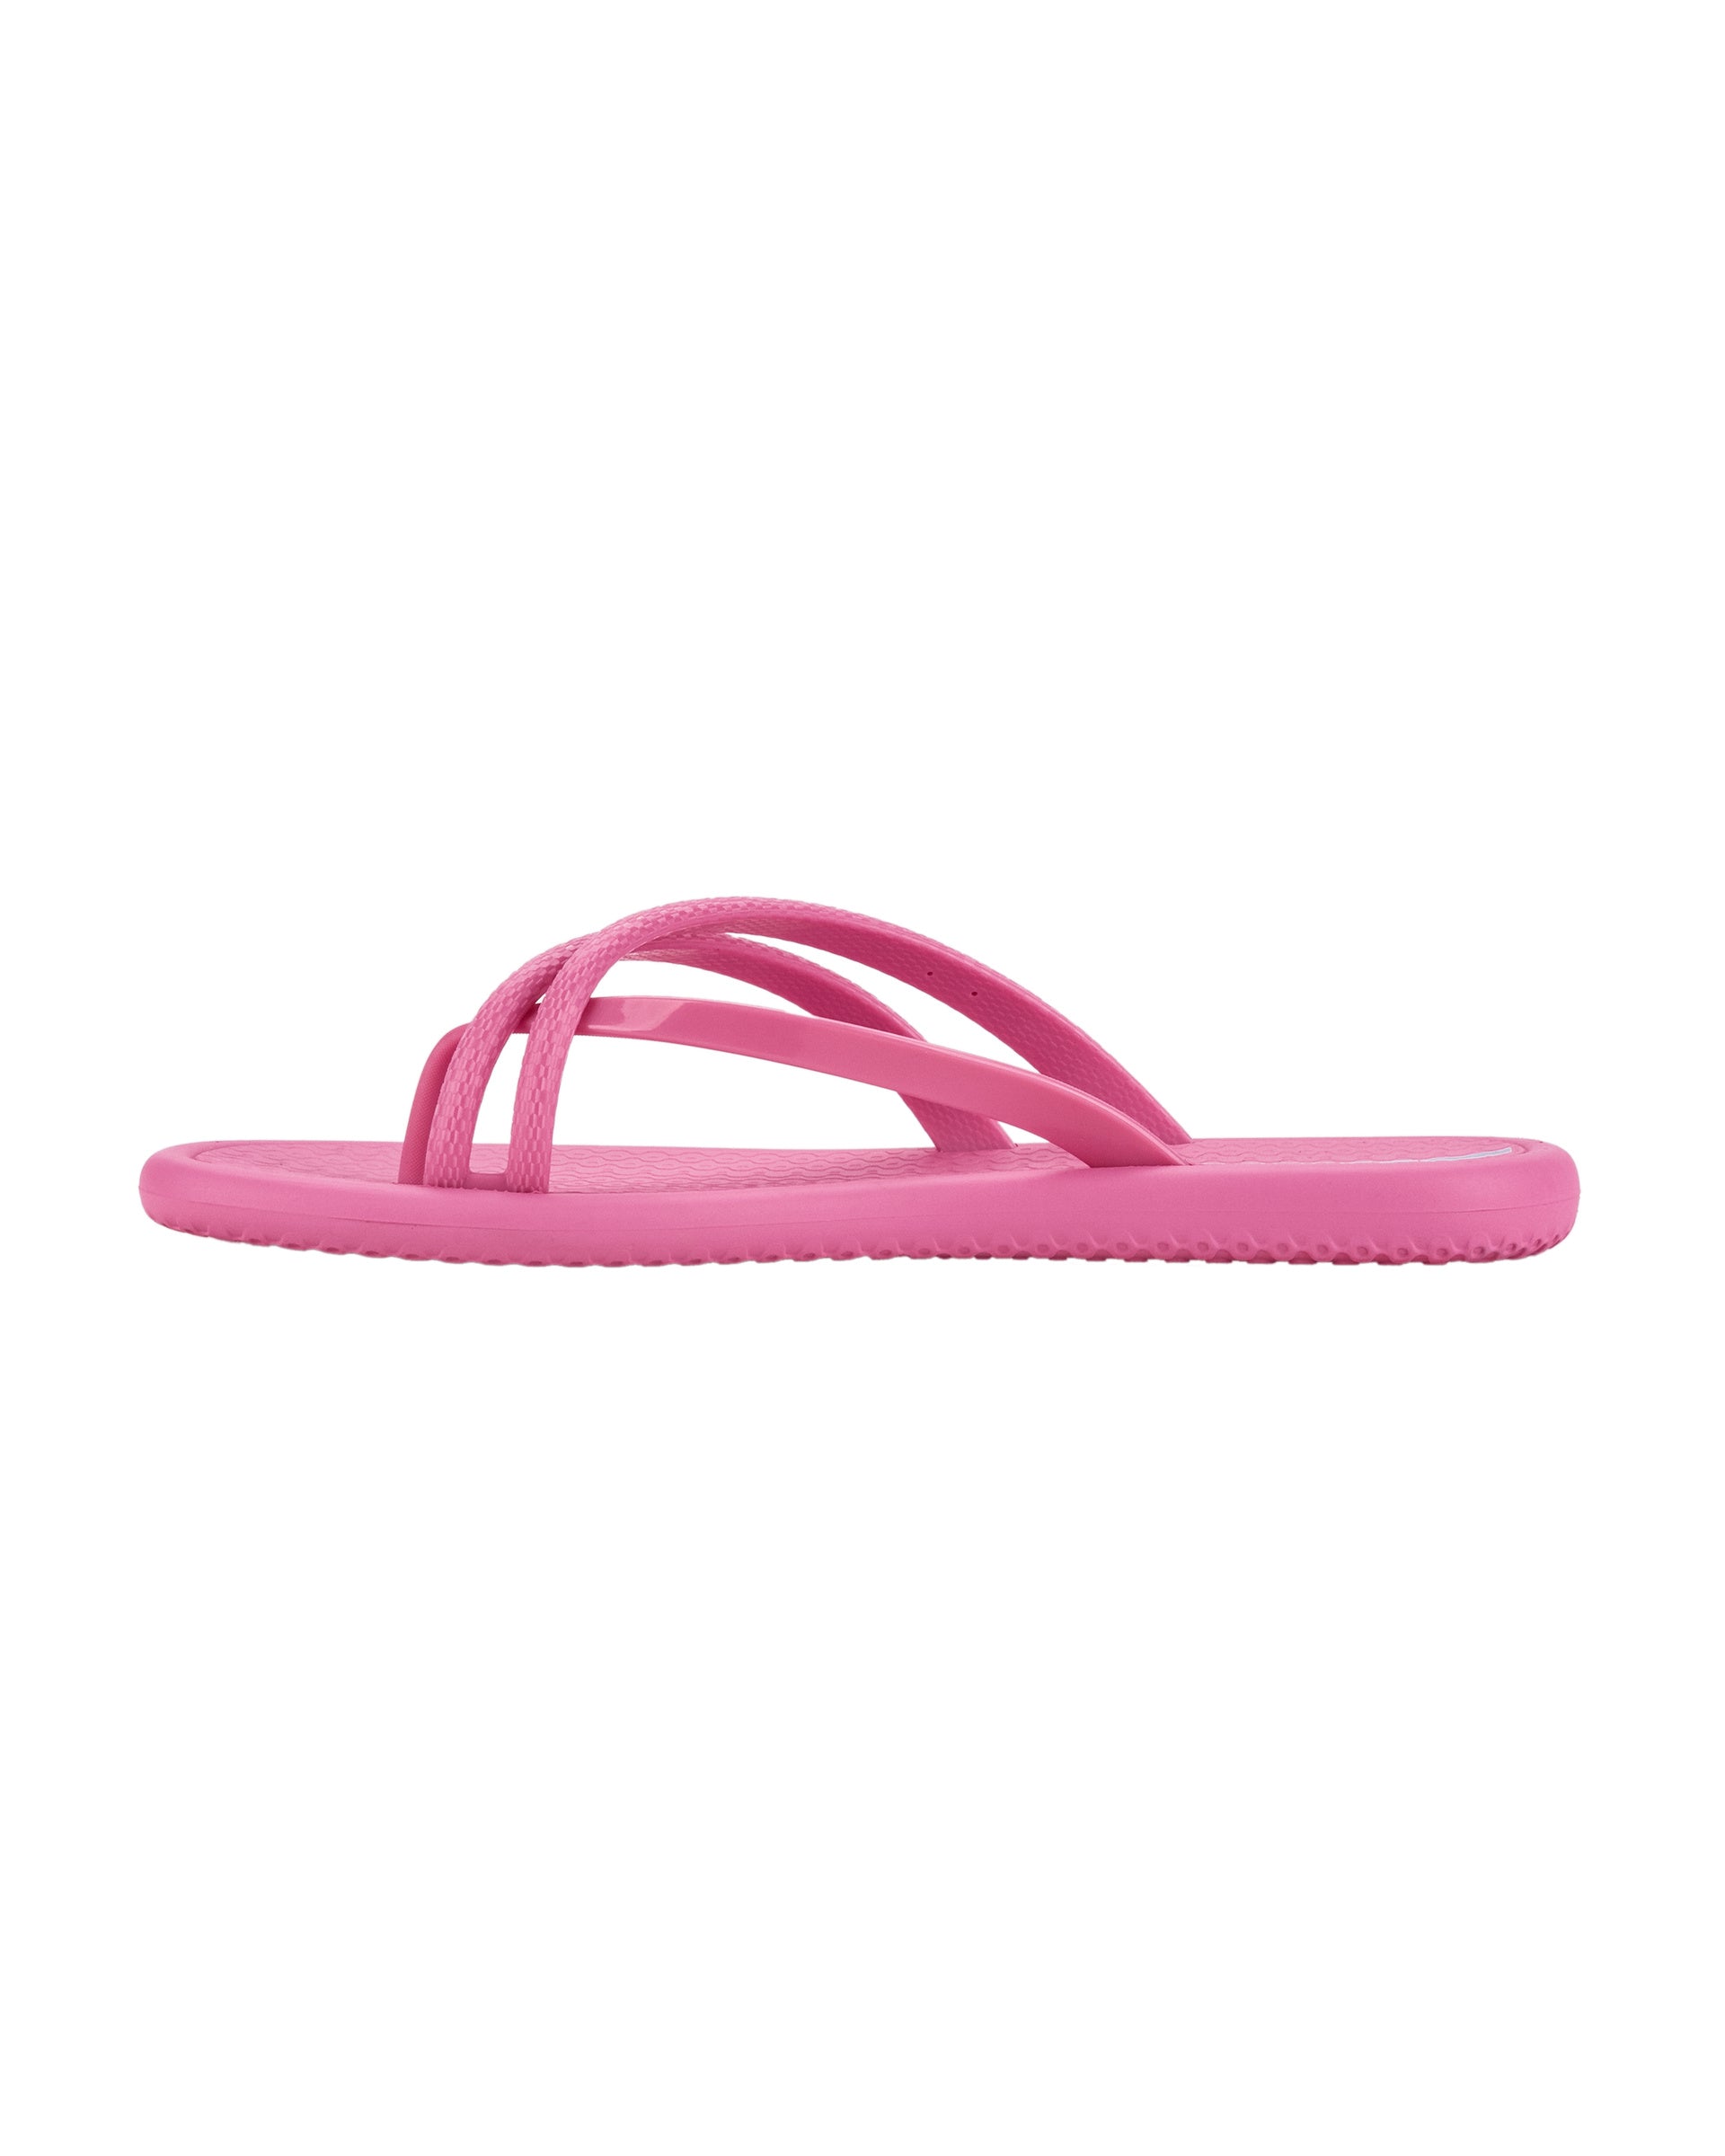 Side view of a pink Ipanema Meu Sol Rasteira women's flip flop with cross straps.